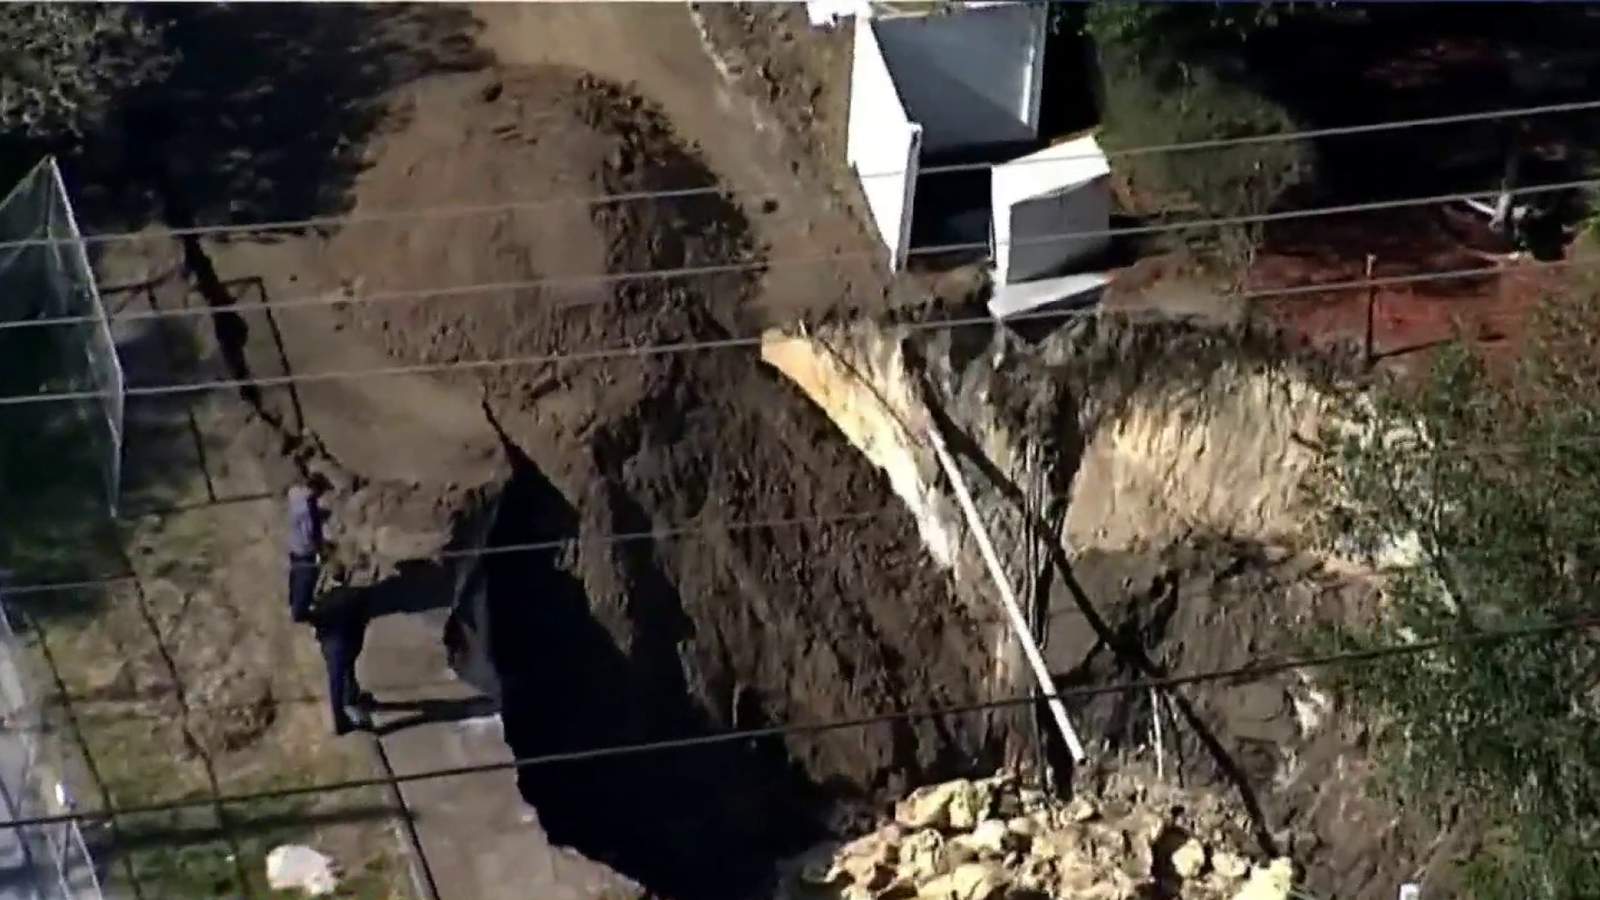 50-foot sinkhole reopens outside Florida sports bar